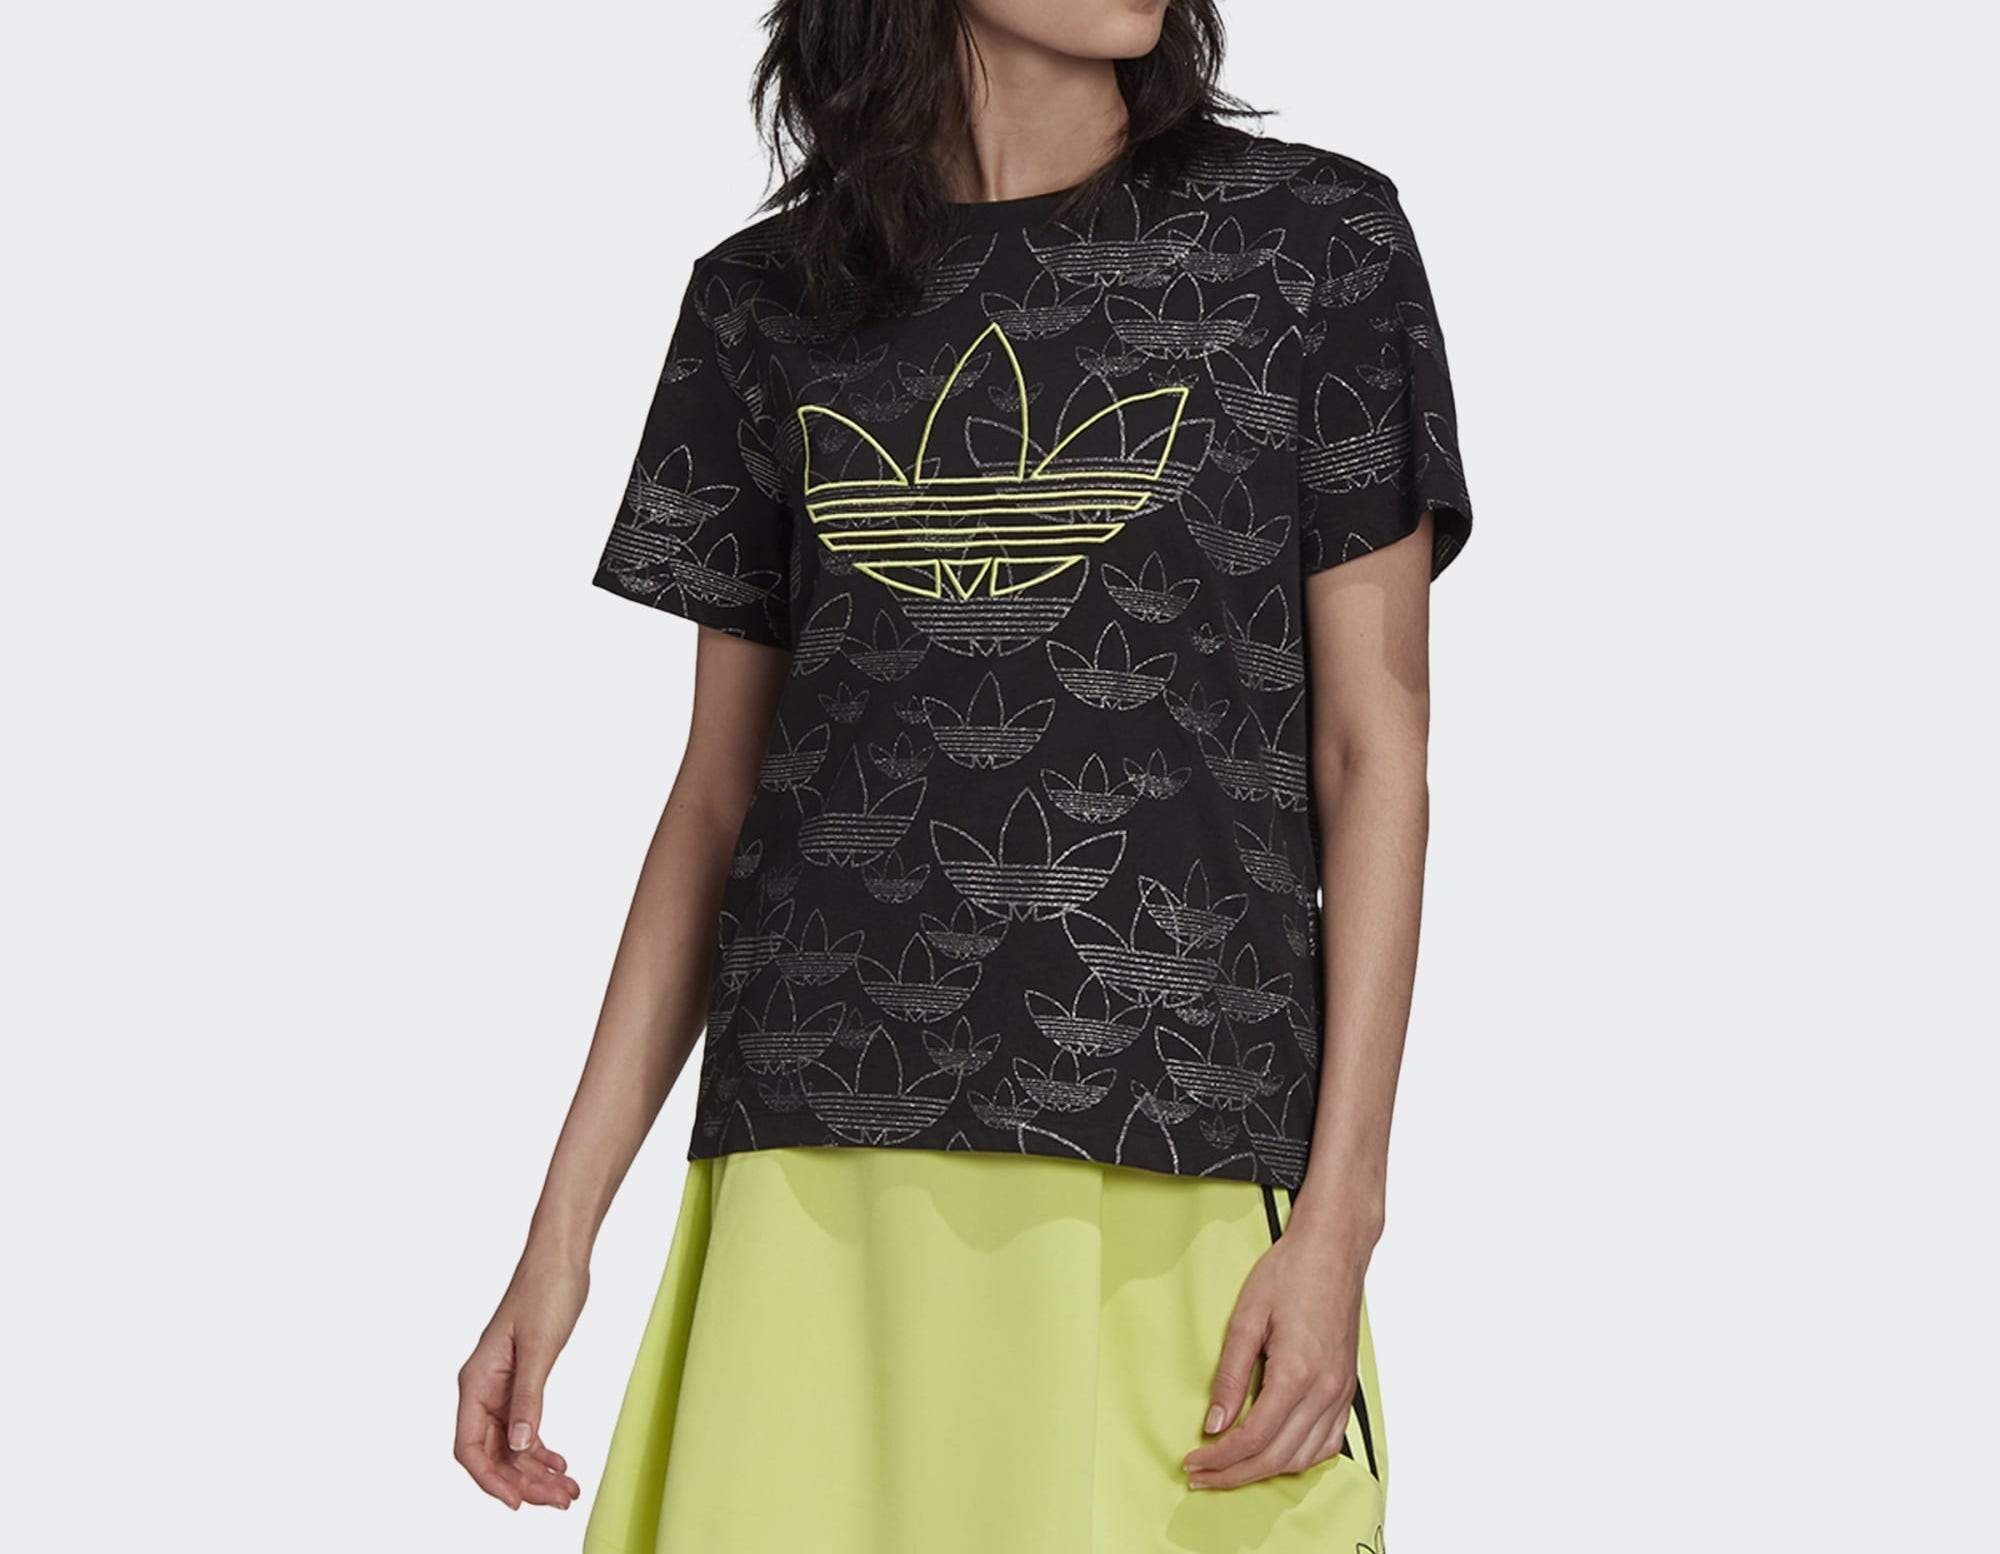 Adidas Women T-Shirts Black - Oshoplin